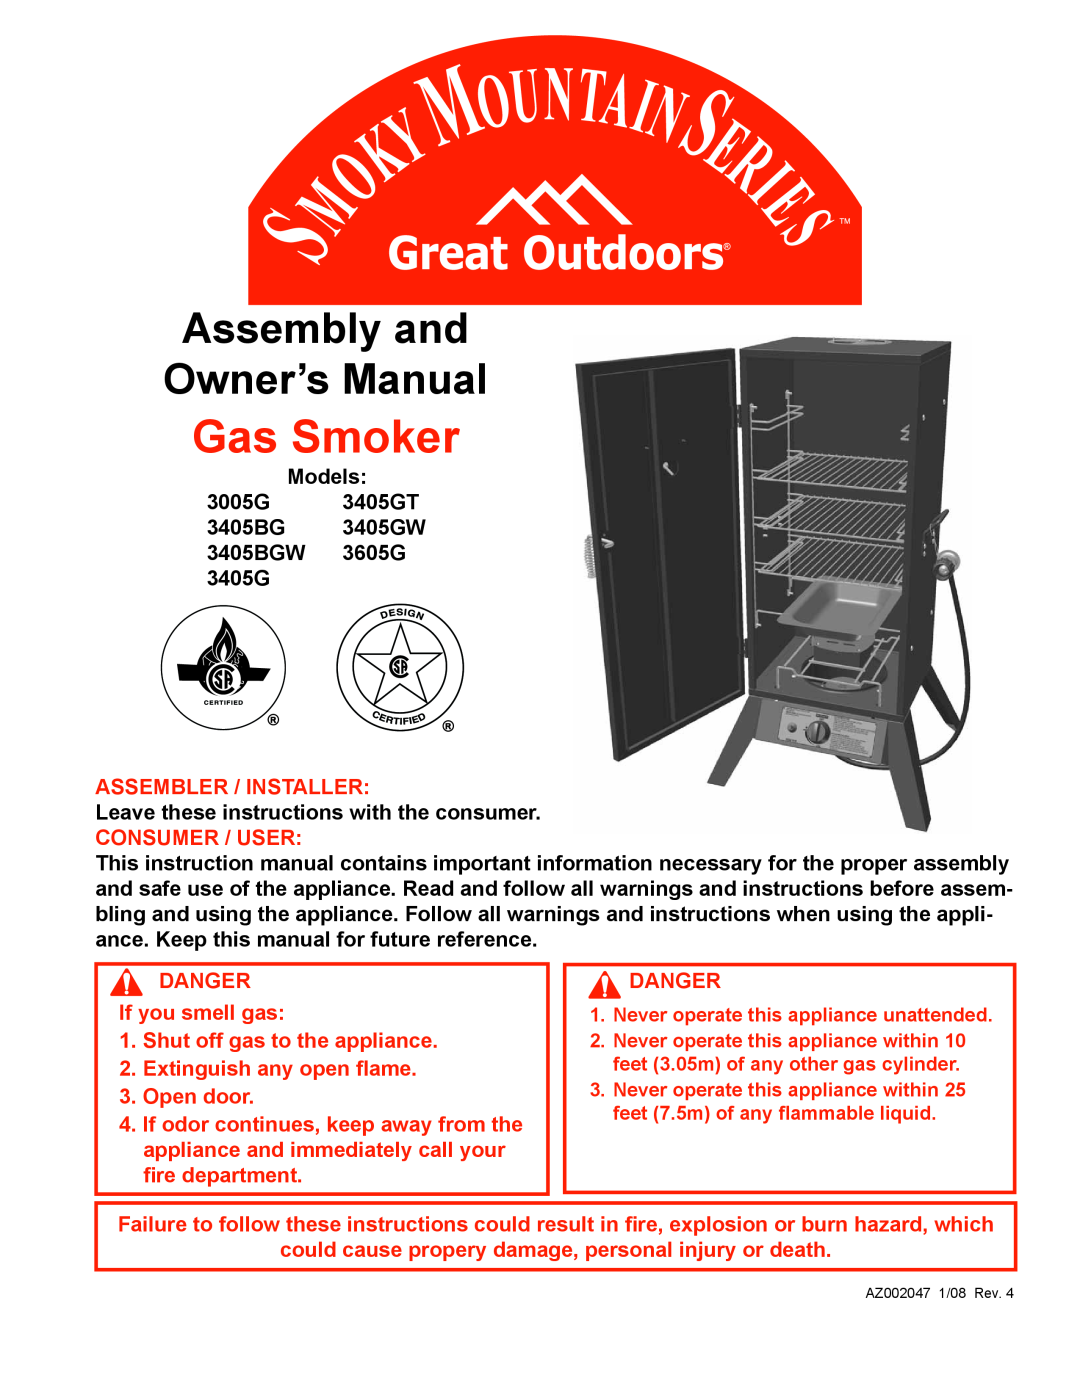 CFM Corporation 3405BG owner manual Assembly and Owner’s Manual, Gas Smoker, Assembler / Installer, Consumer / User 